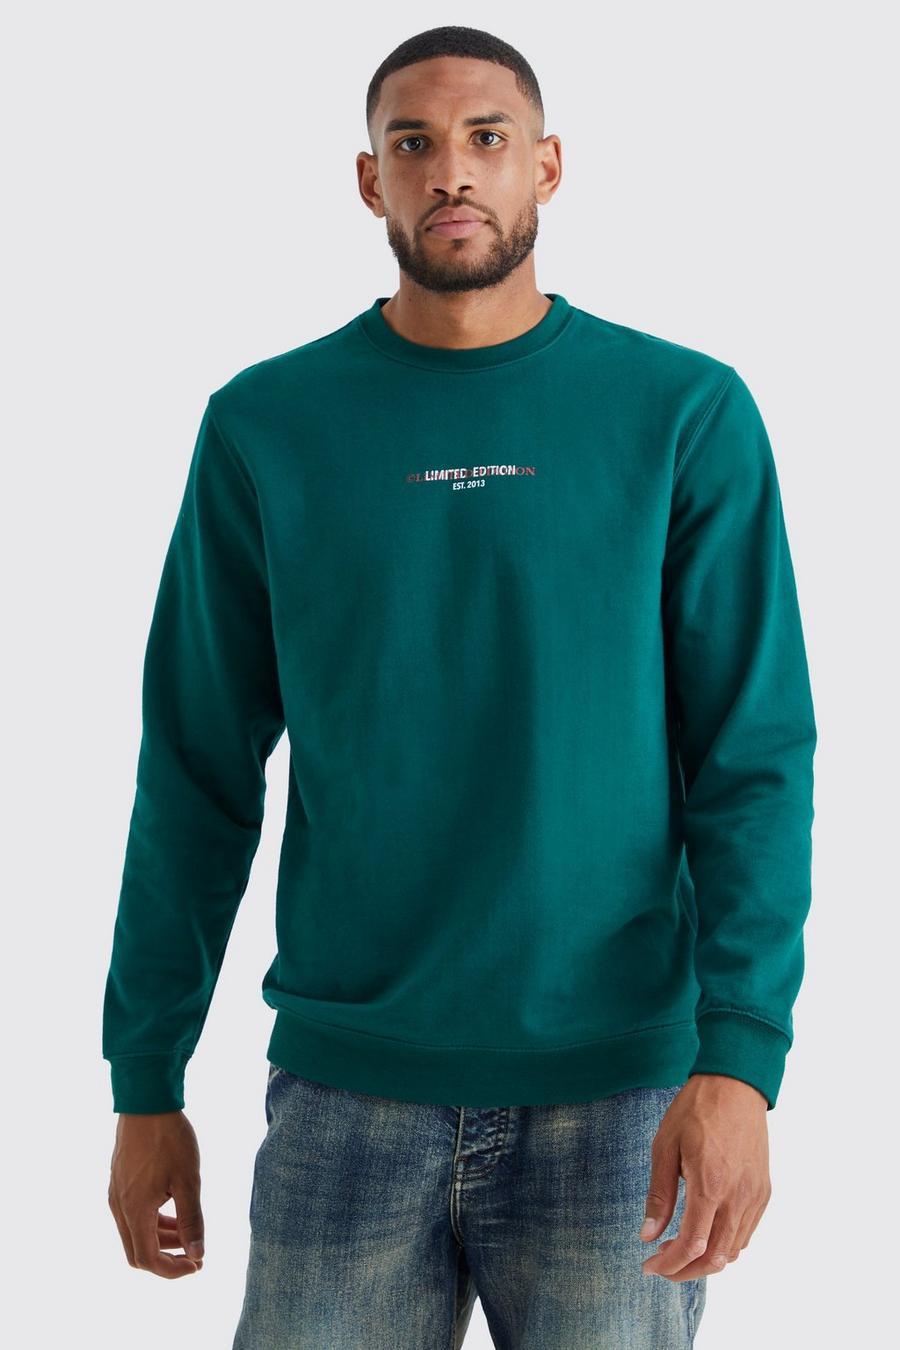 Forest vert Tall Limited Sweatshirt